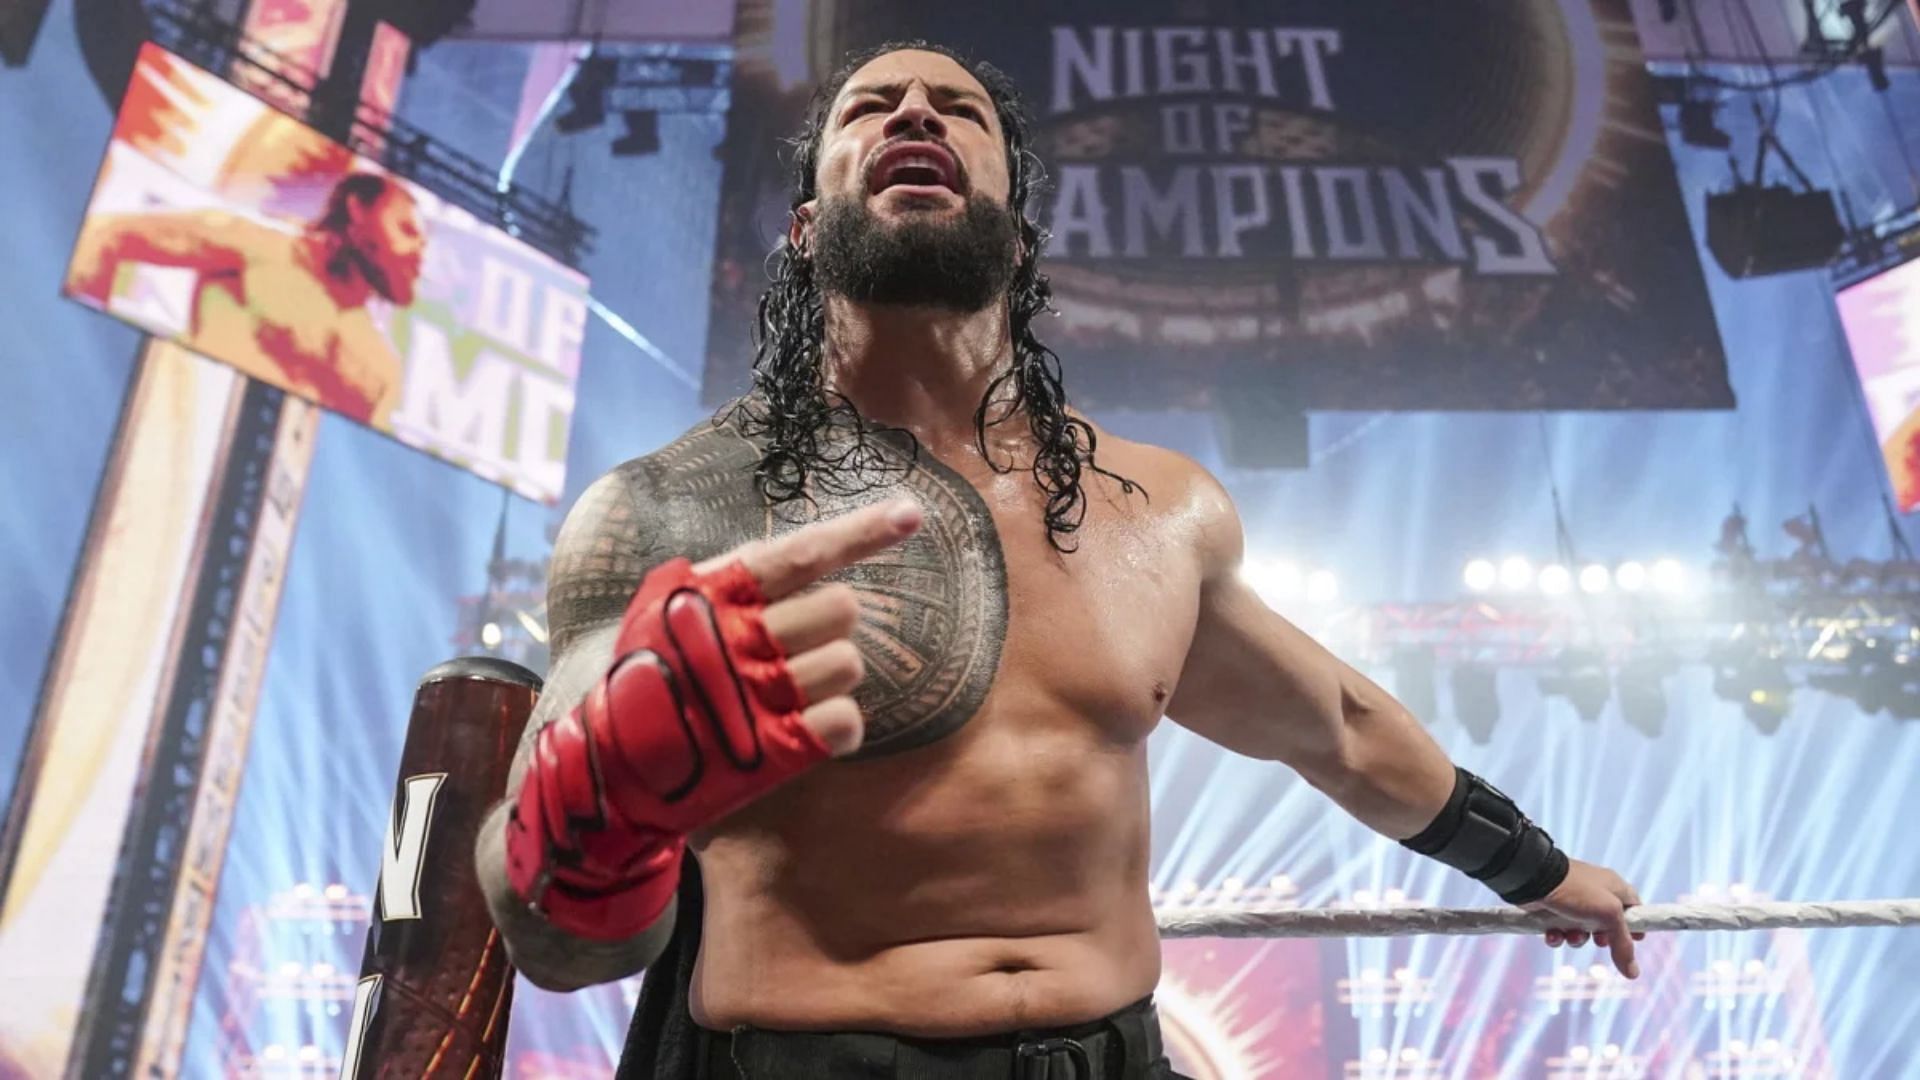 Undisputed WWE Universal Champion Roman Reigns